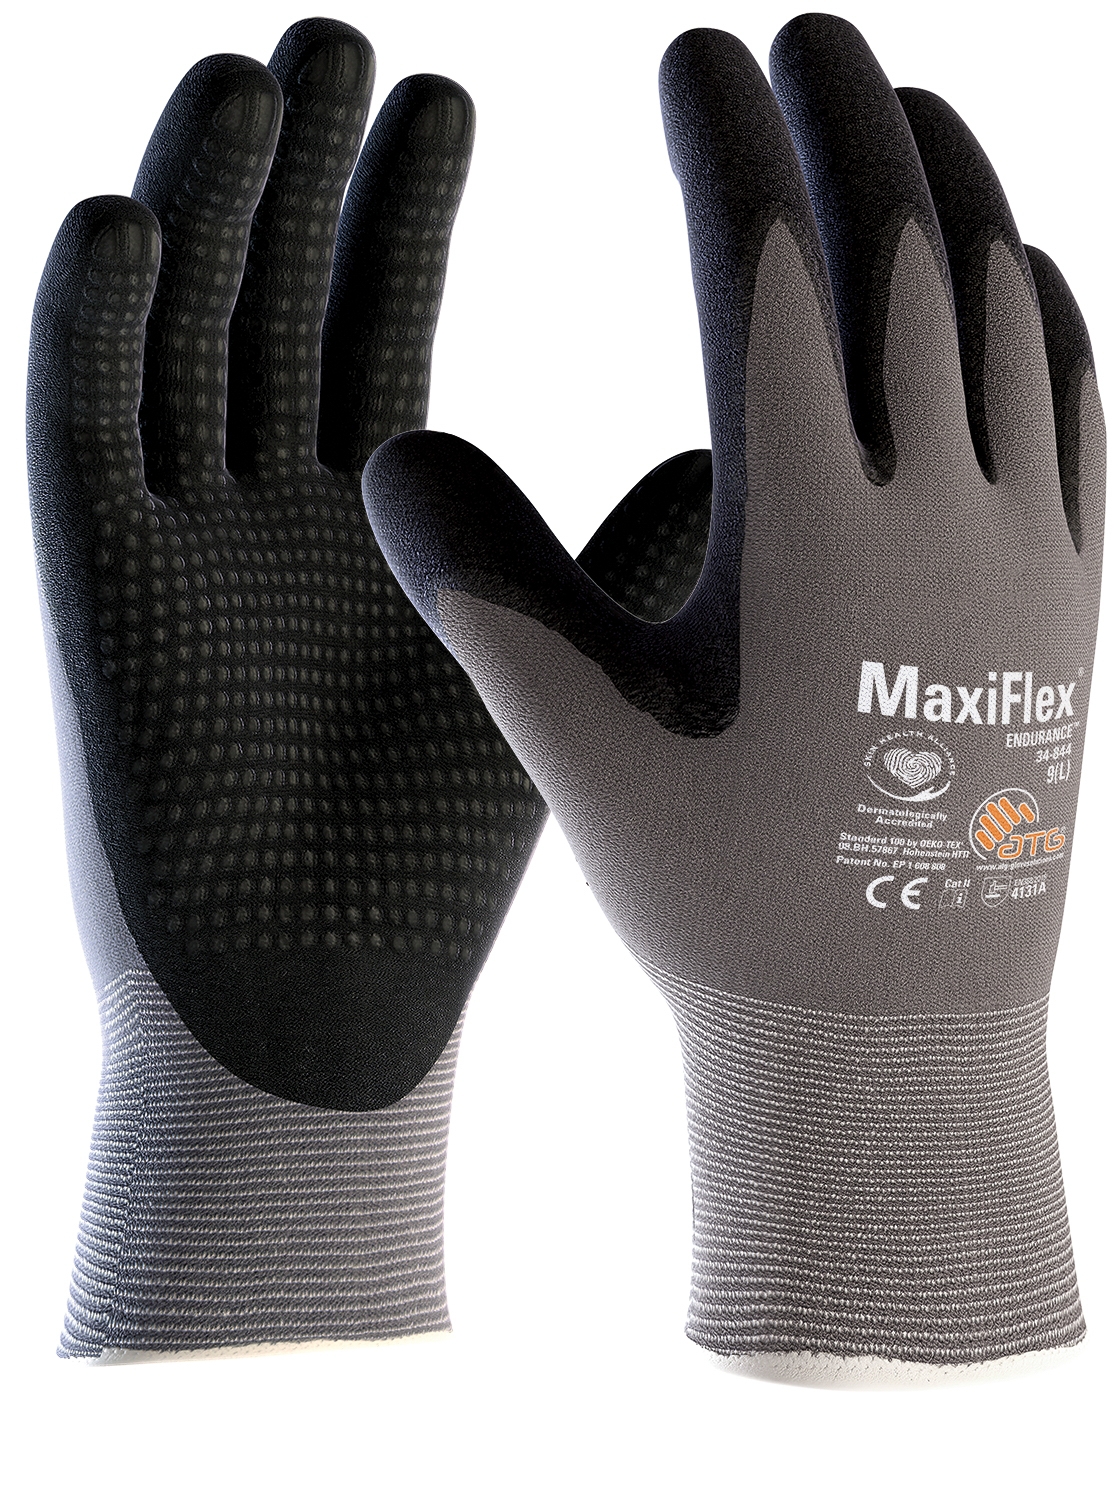 ATG® Nylon-Strickhandschuhe (34-844) MaxiFlex® Endurance™ grau/schwarz